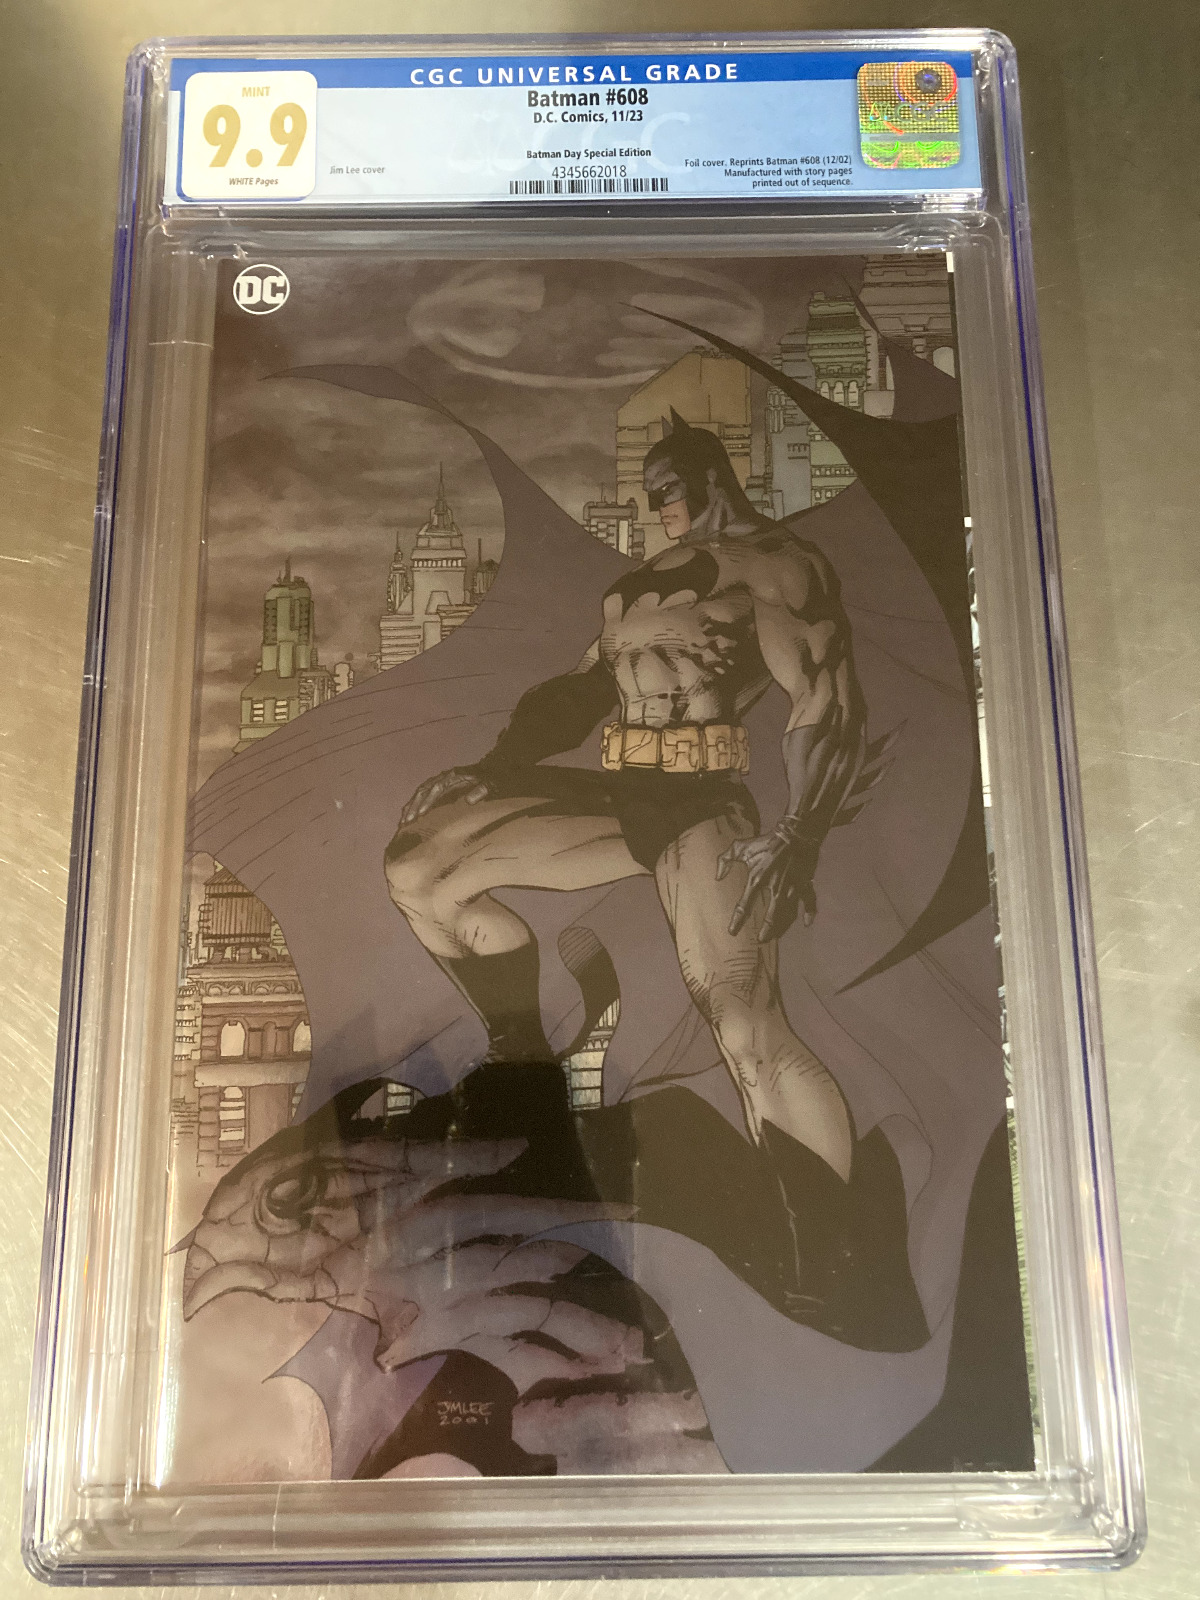 Batman #608 (9.9 GCG Mint) - Batman Day Special Edition - RARE- Printing ERROR